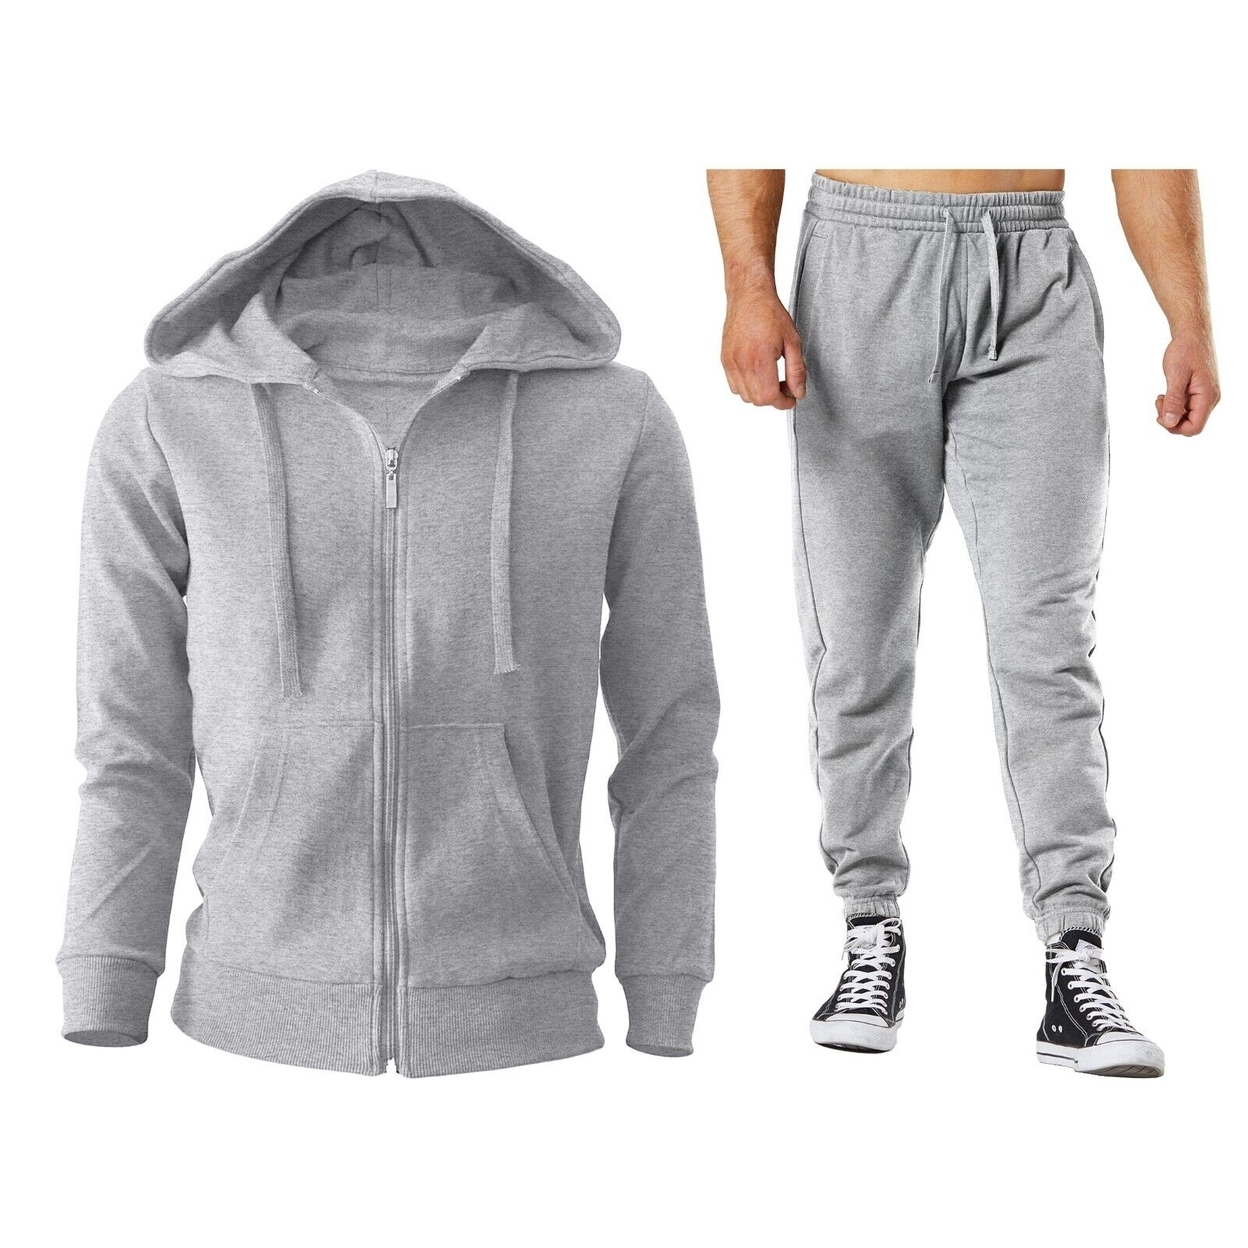 4-Piece: Men's Winter Warm Cozy Athletic Multi-Pockets BIG & TALL Sweatsuit Set - Grey, 3xl